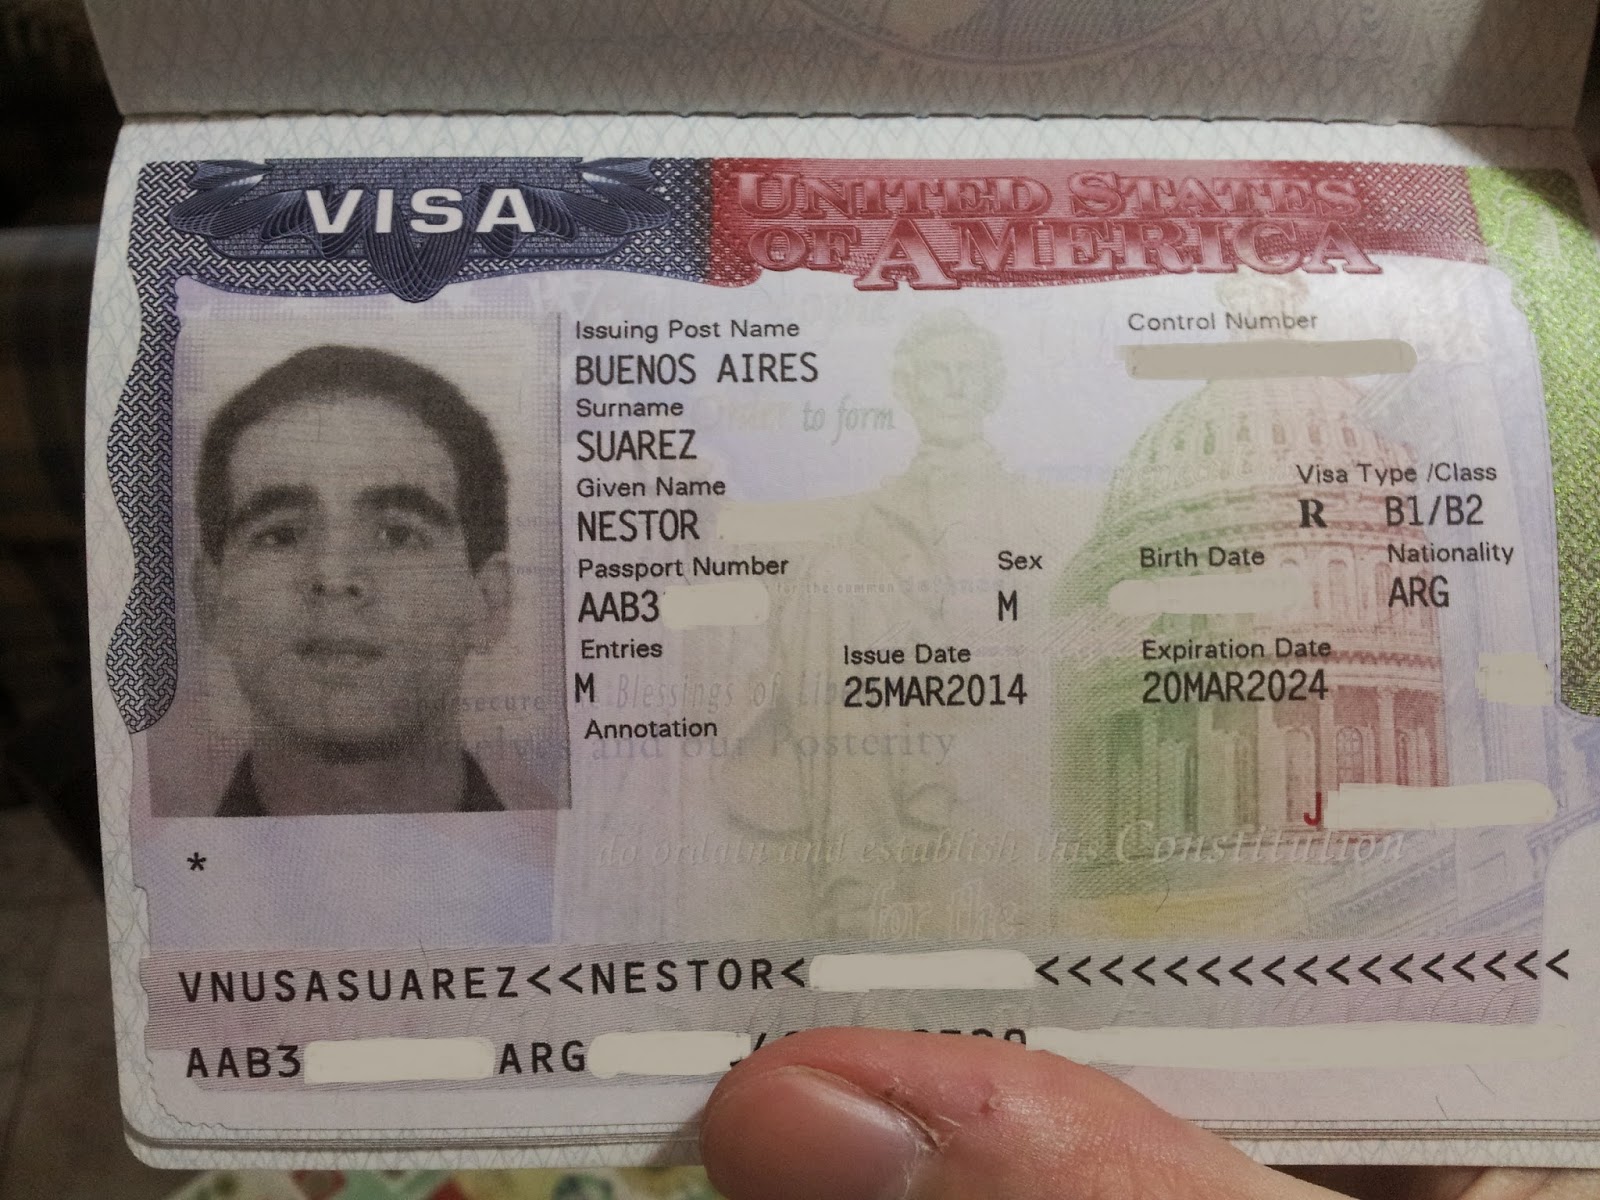 Visa Americana. Рабочая виза в США. USA b1 b2 visa. USA visa Types class.